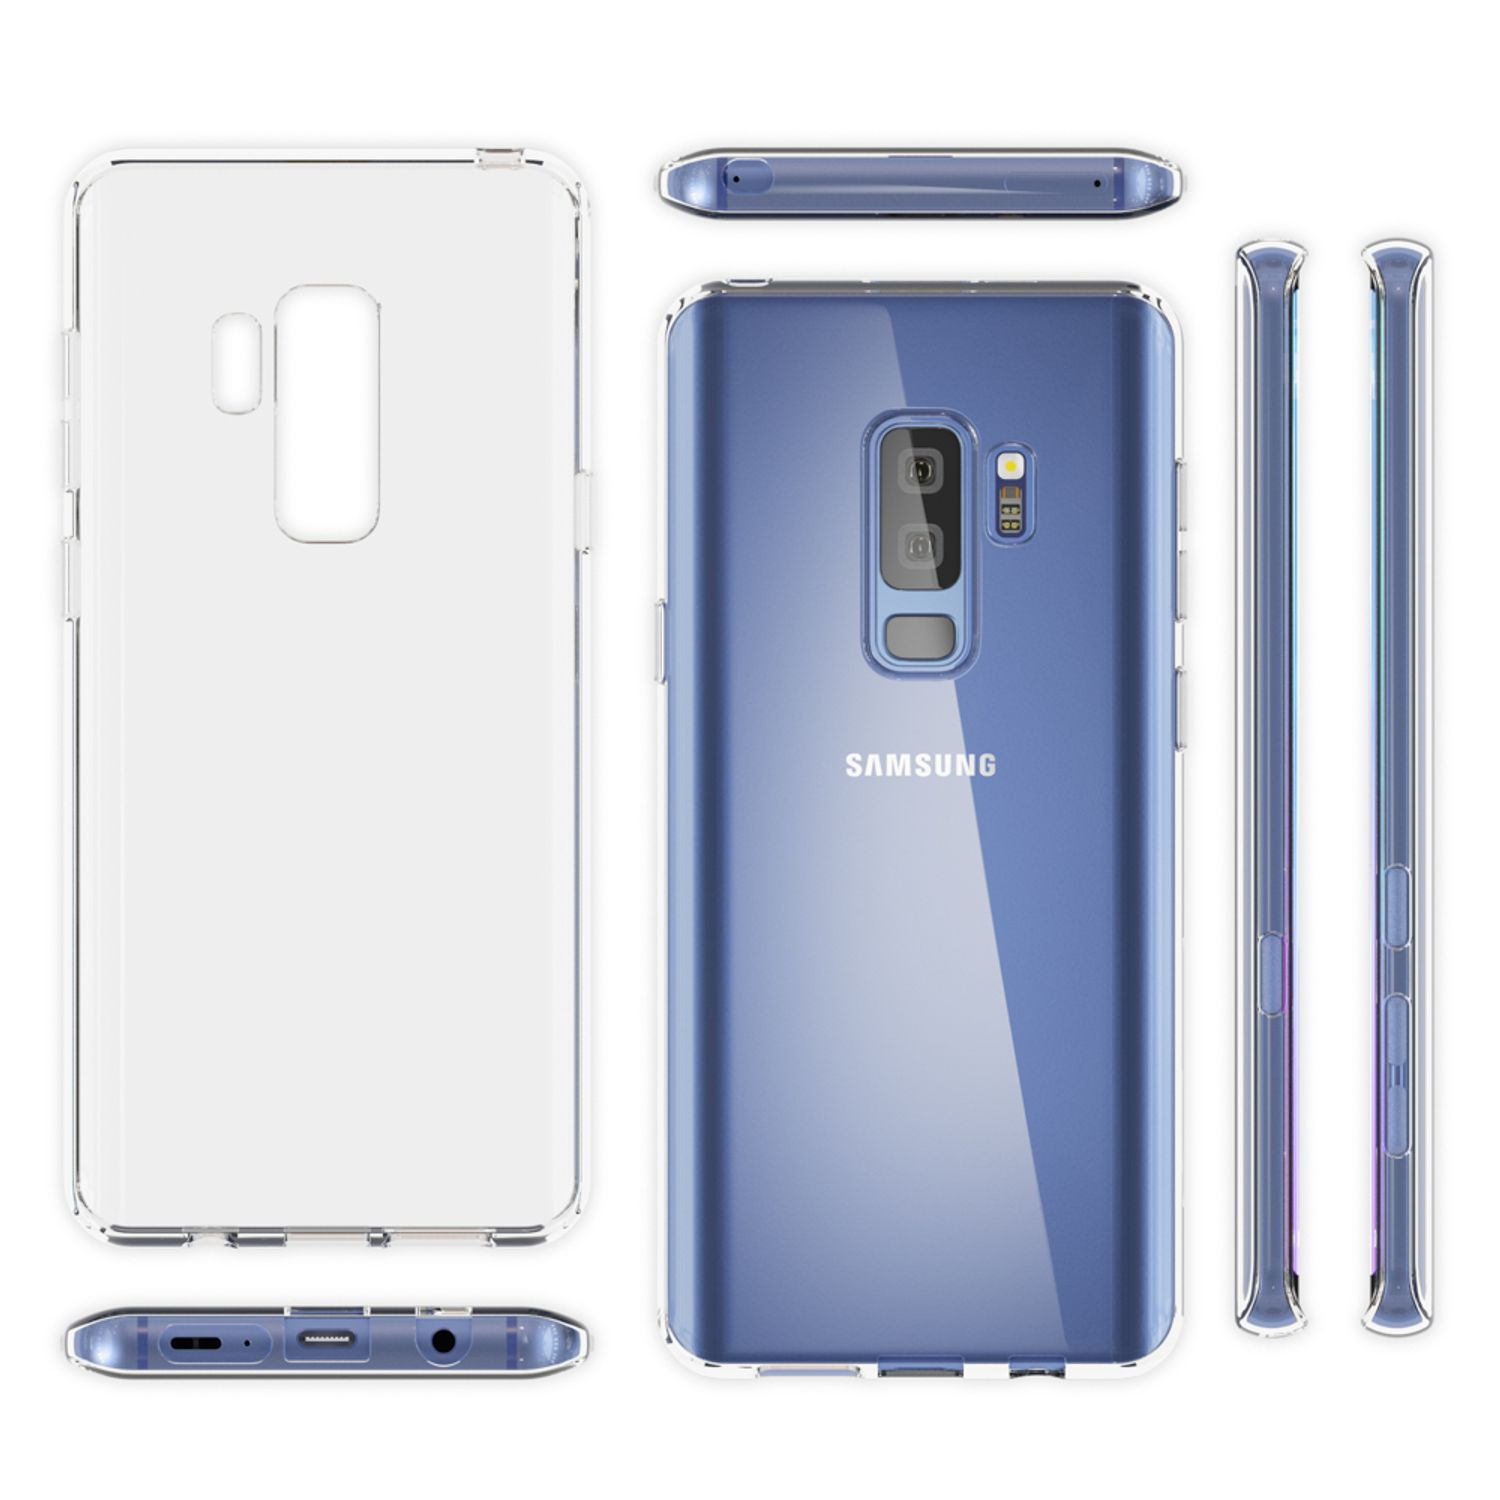 NALIA Motiv Silikon Hülle, Backcover, Mehrfarbig S9 Galaxy Plus, Samsung